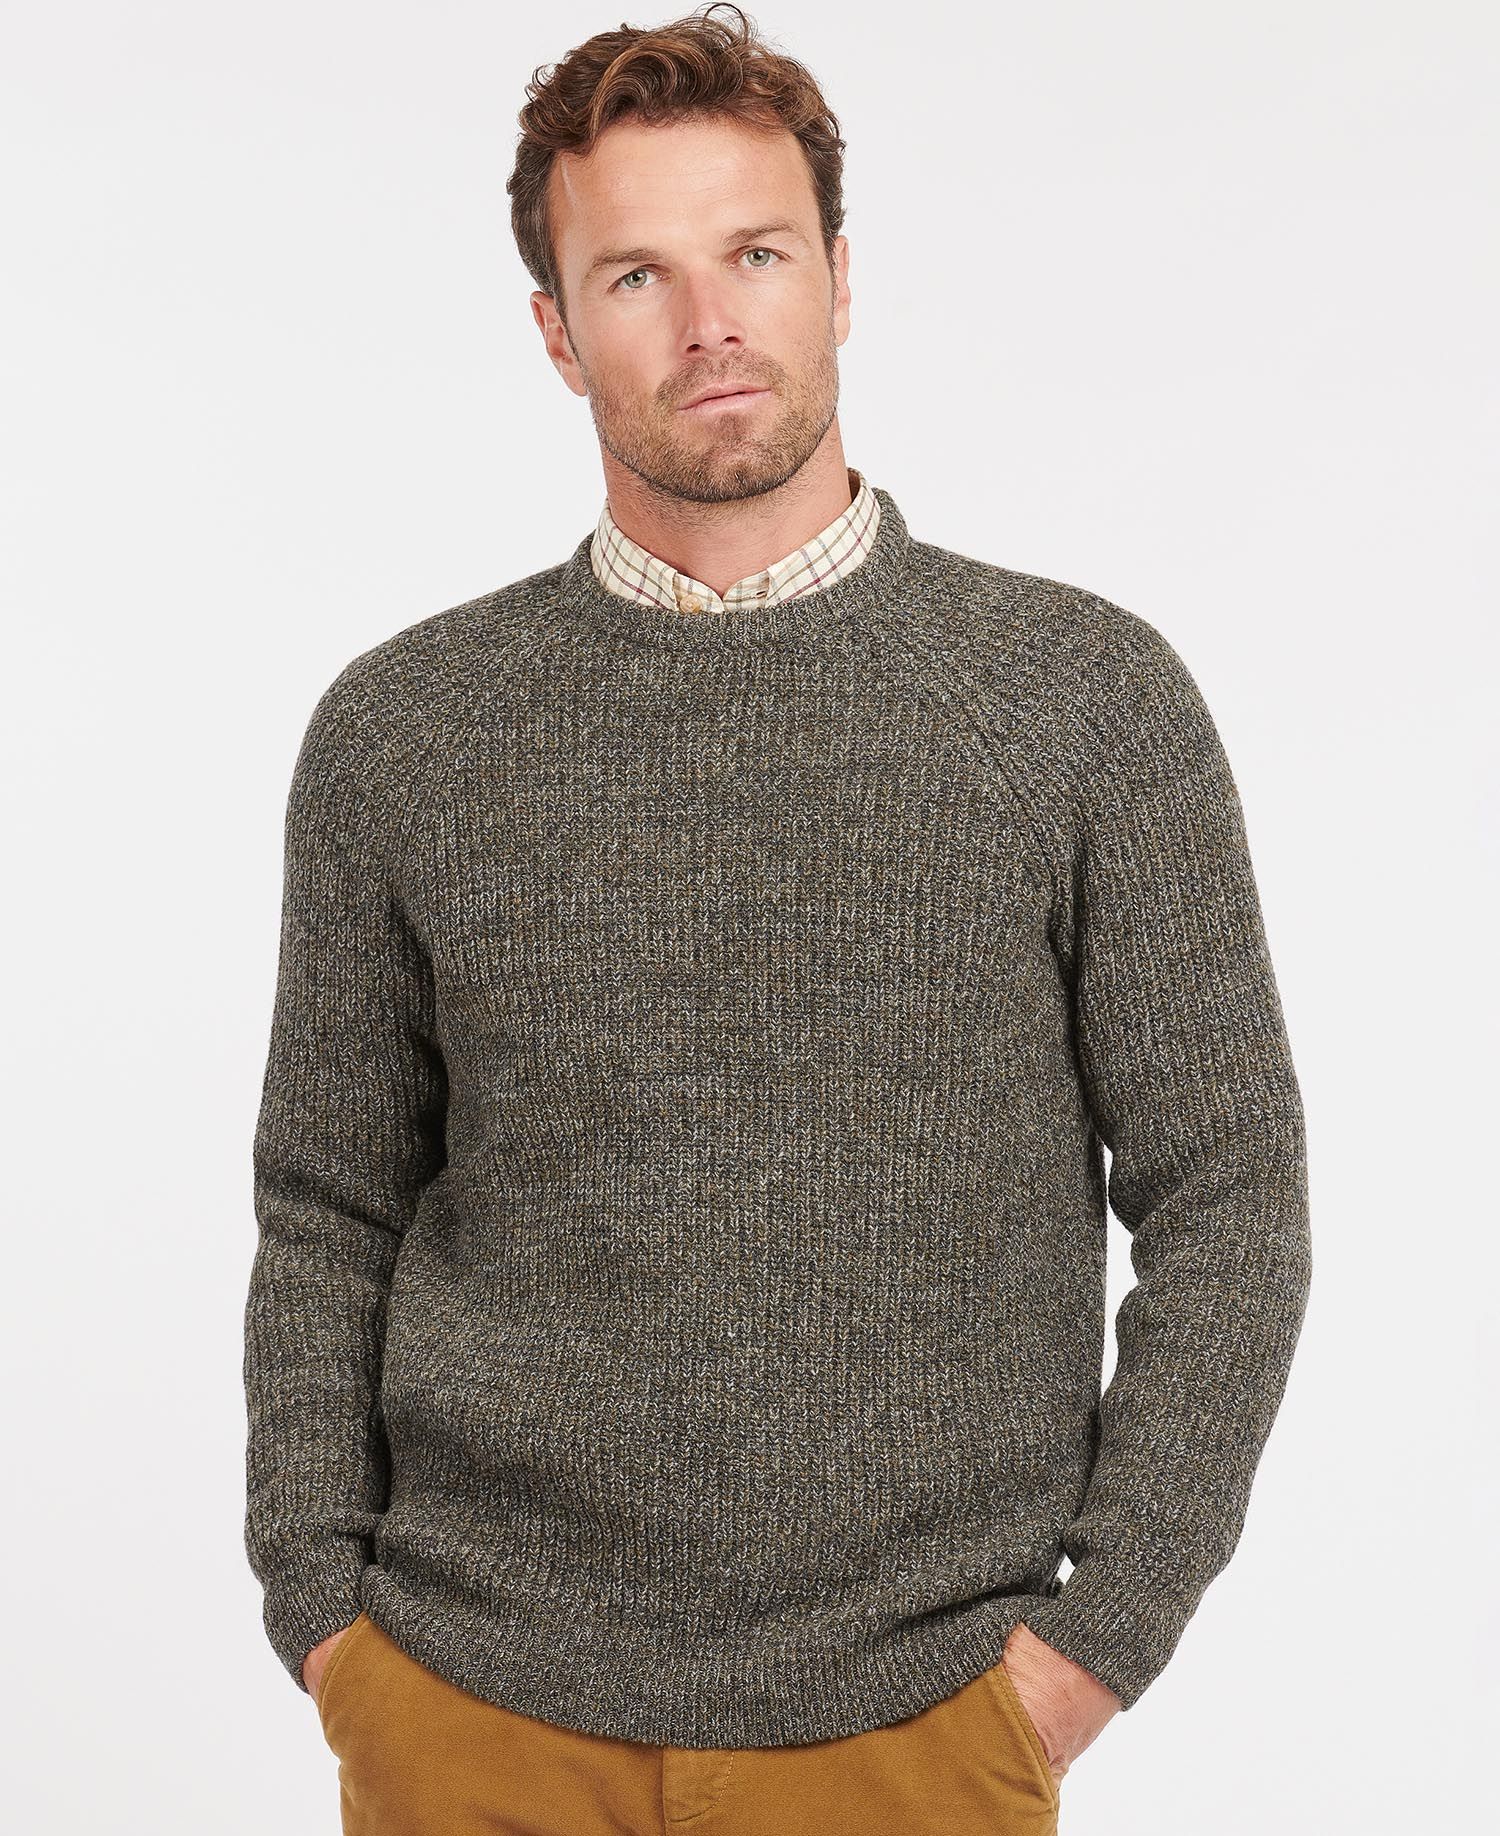 Men's Horseford Crew Neck Sweater - Olive